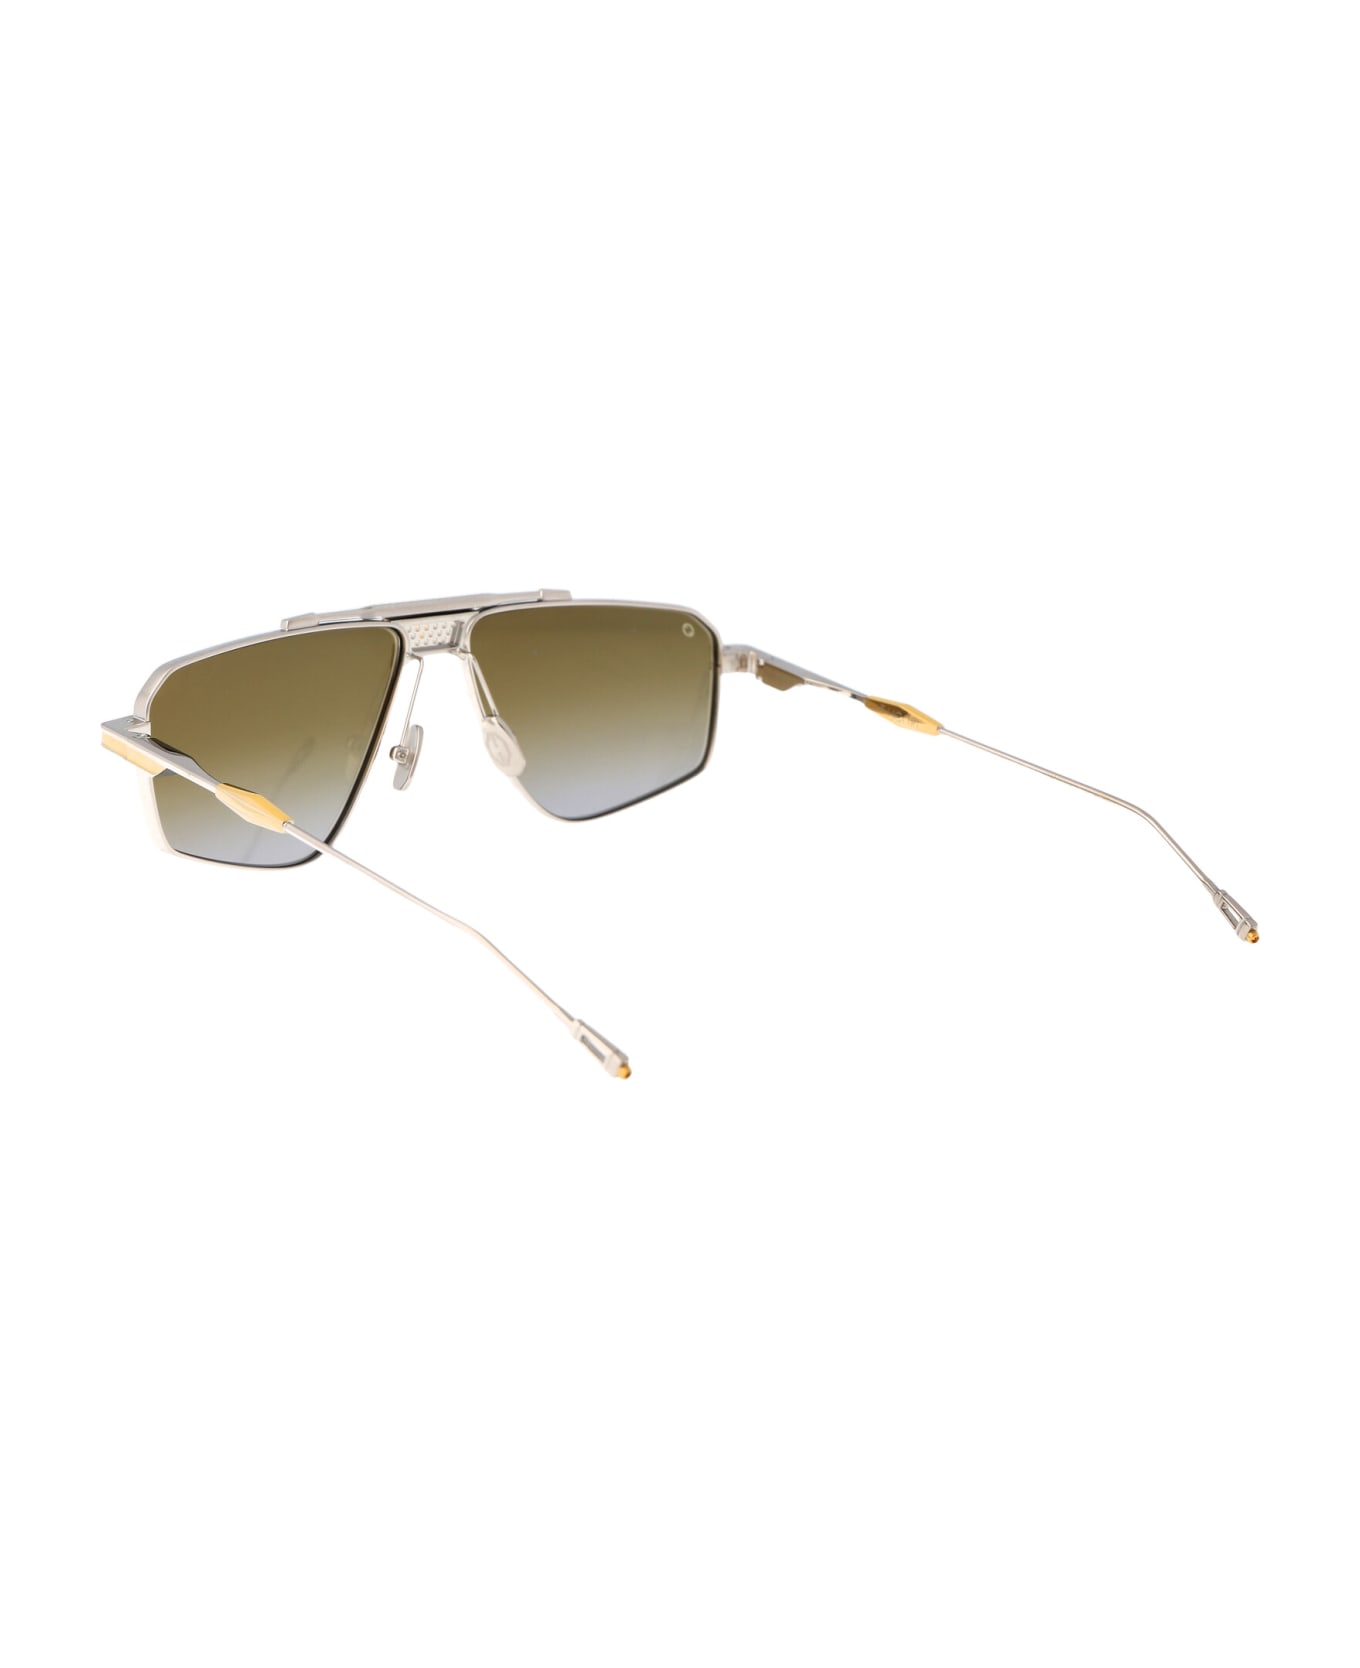 T Henri Drophead Sunglasses - ANOMOLY サングラス